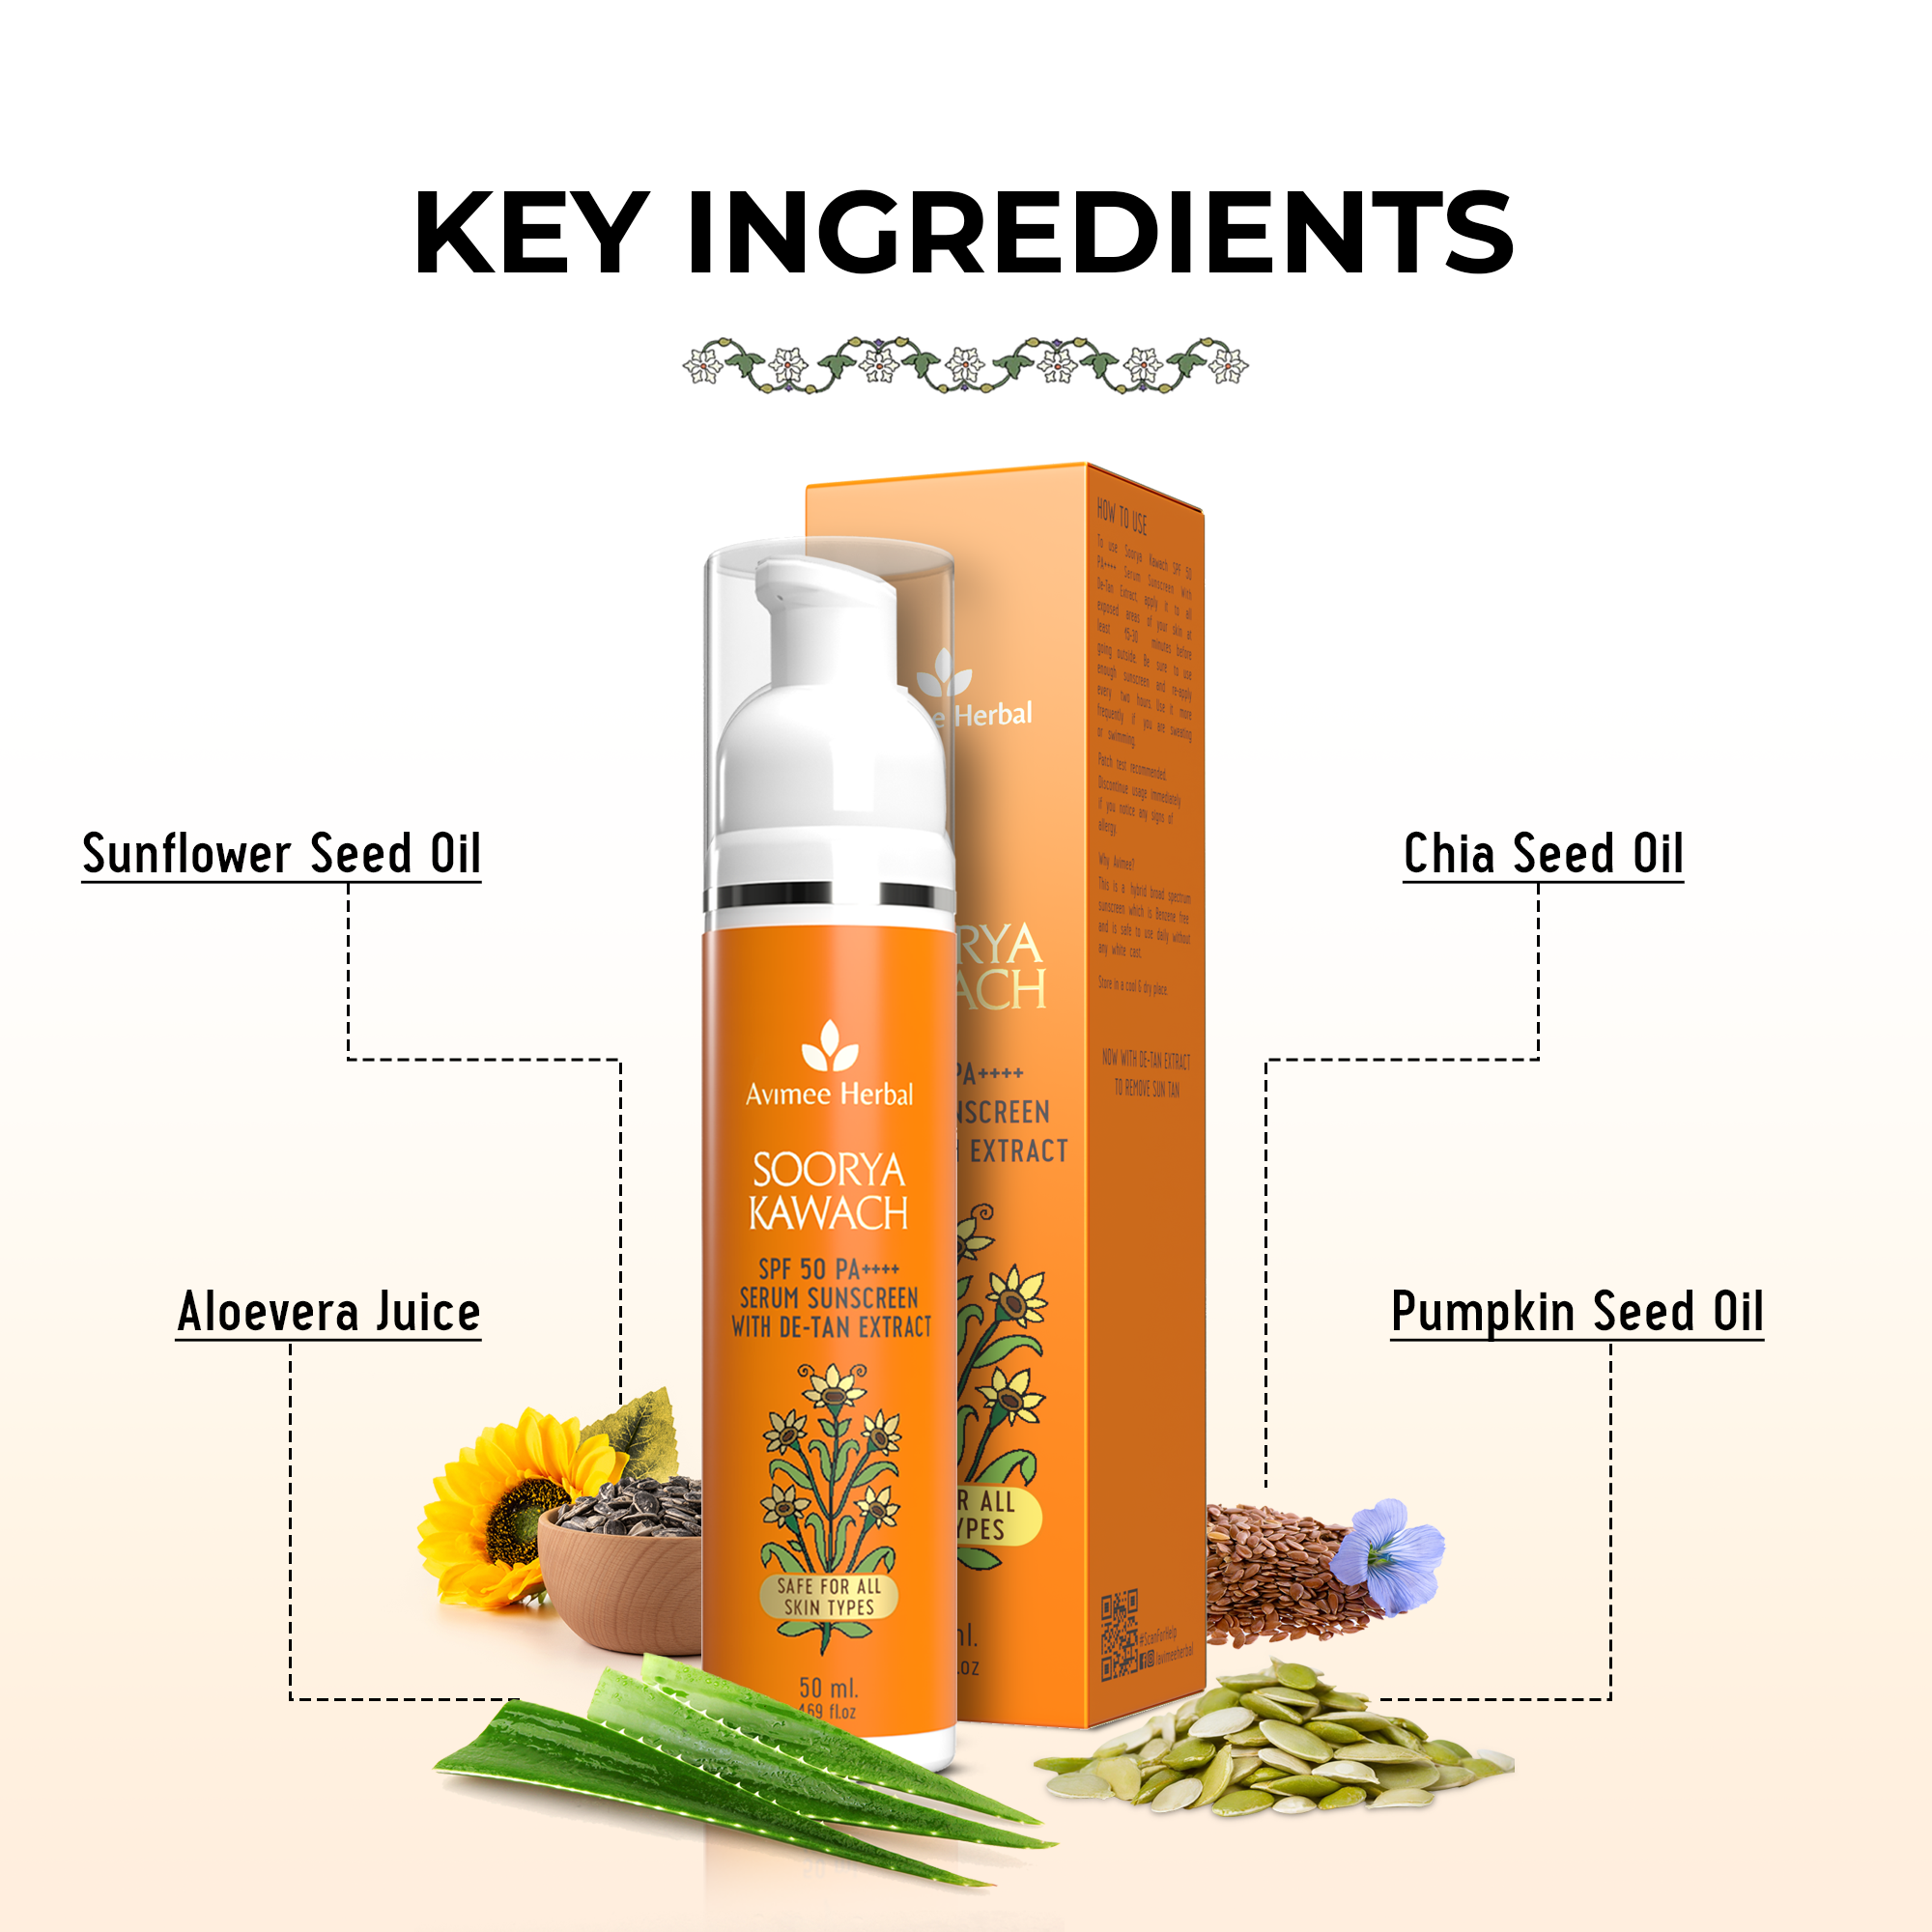 Soorya Kawach SPF50 PA++++ Hybrid Sunscreen with De-Tan Extract